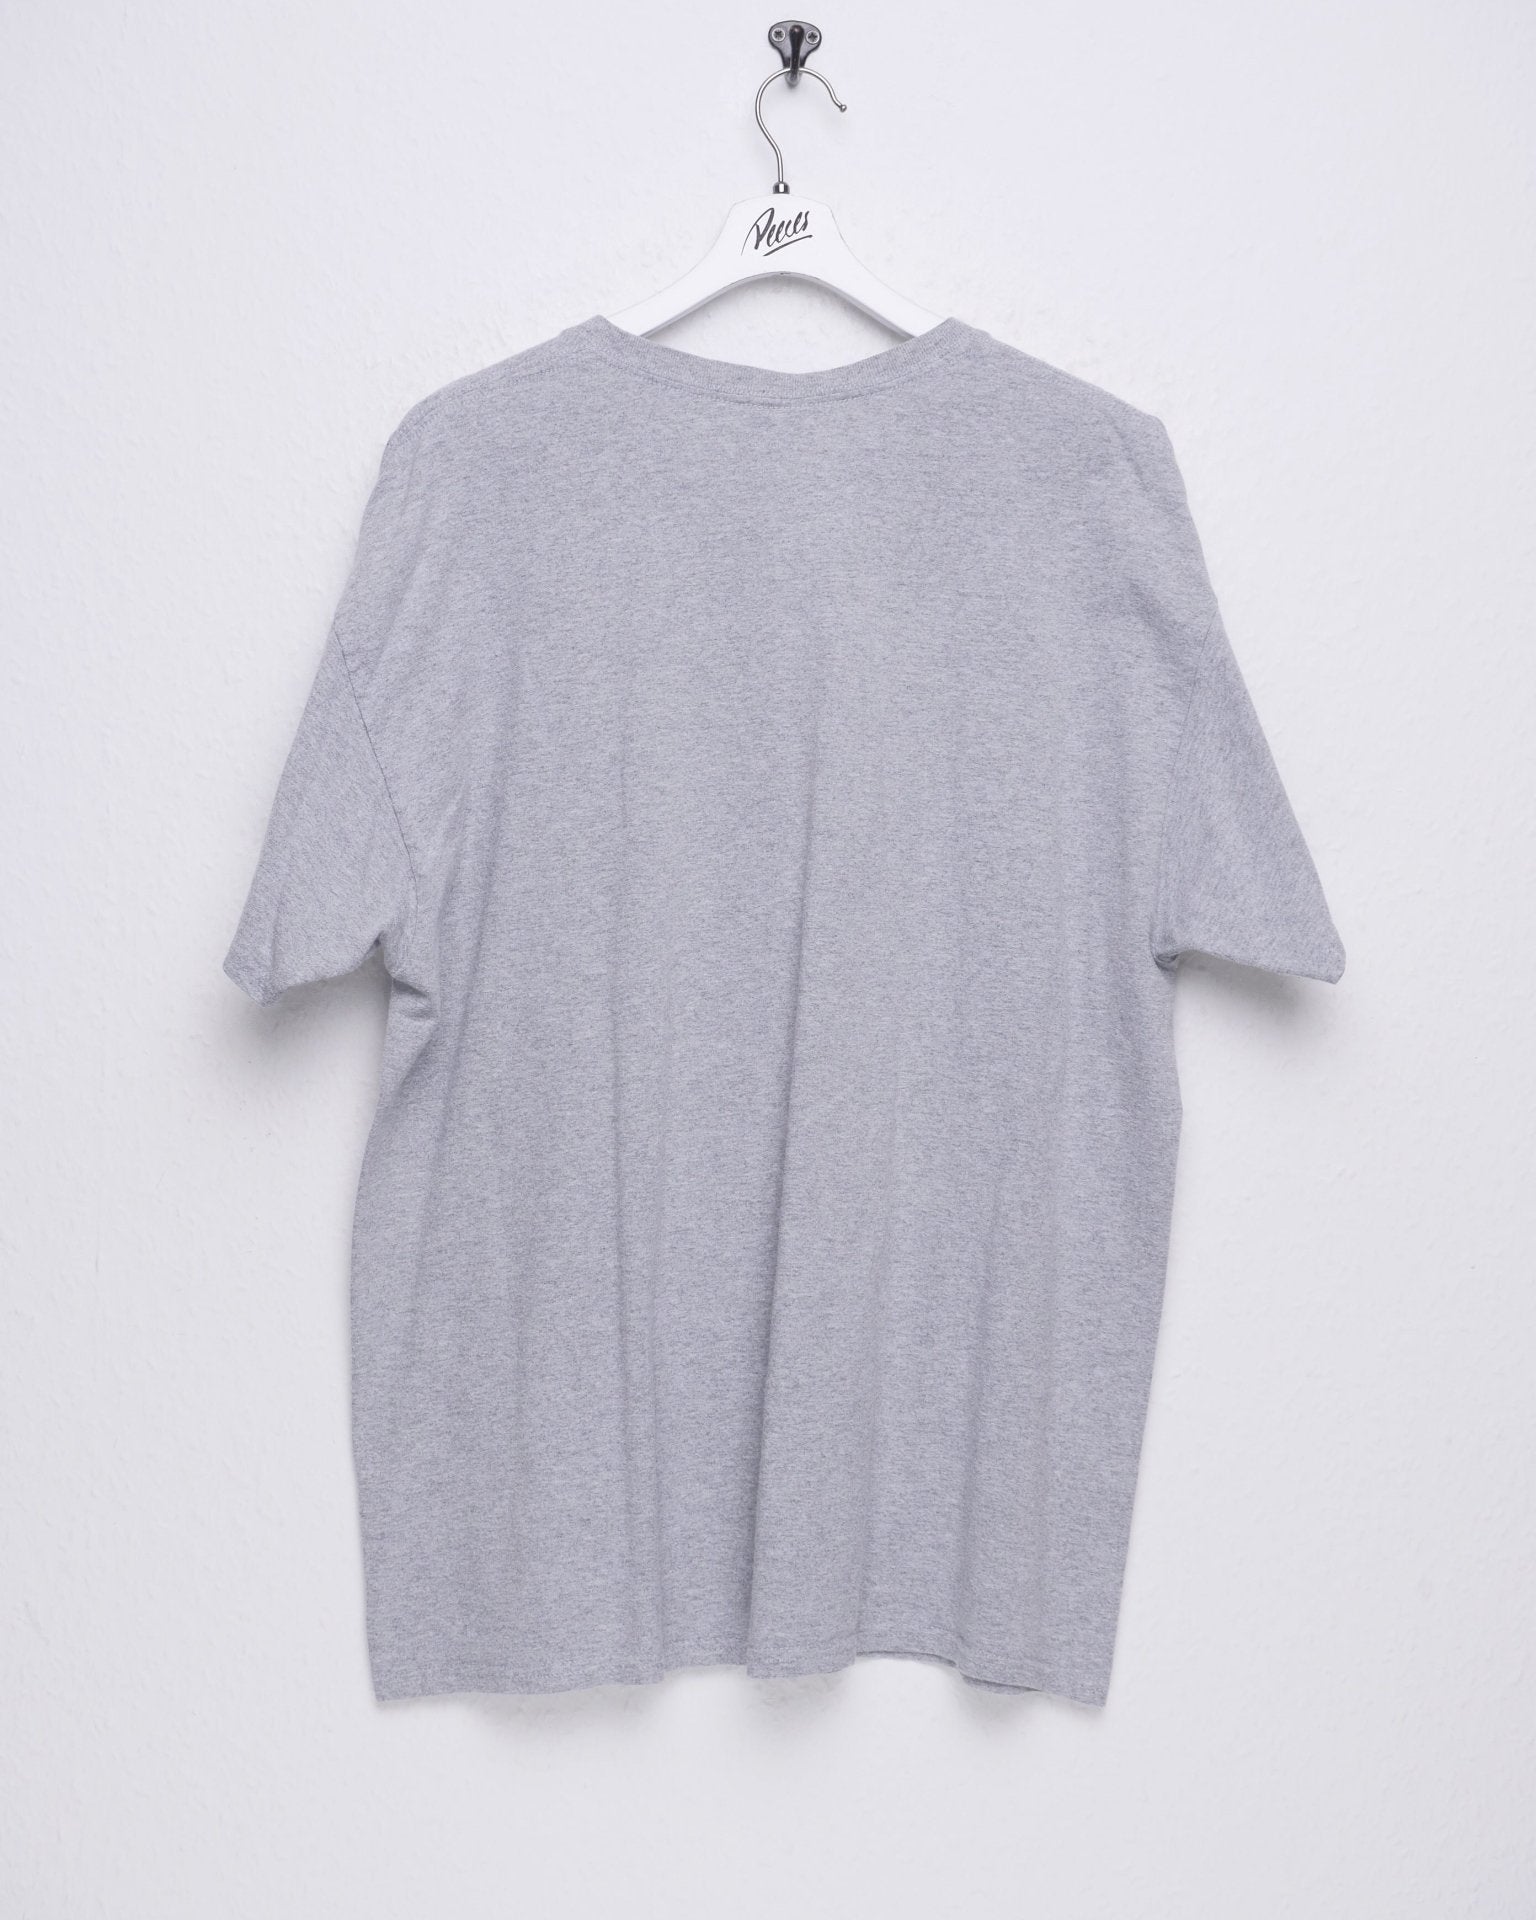 Jersey Boys printed Graphic grey Shirt - Peeces